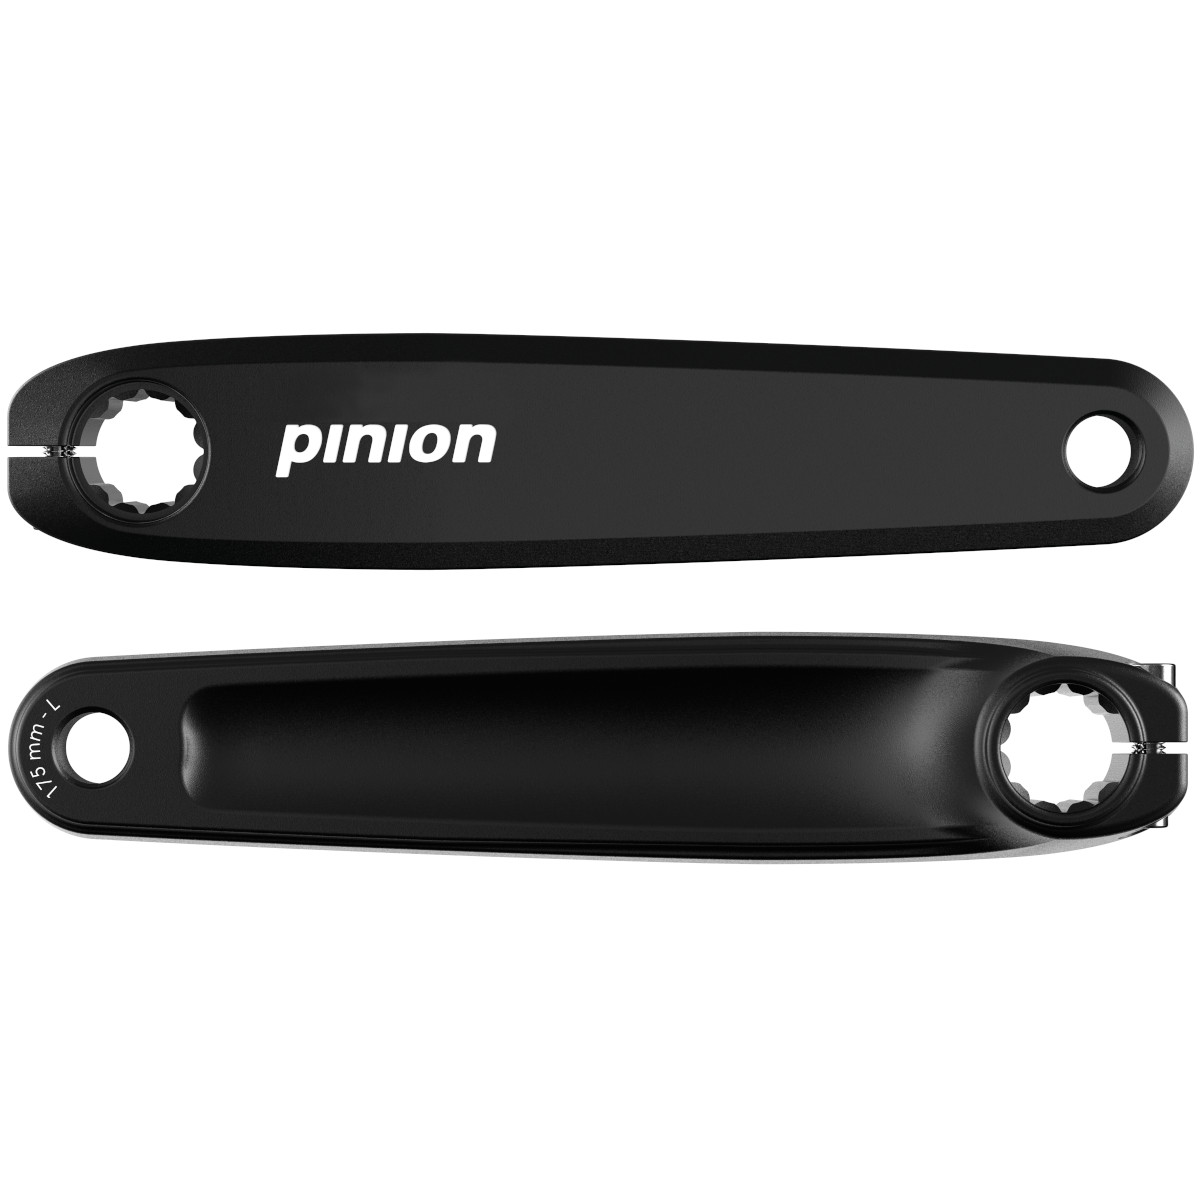 Productfoto van Pinion Crank Arm Forge - P8510 / P8511